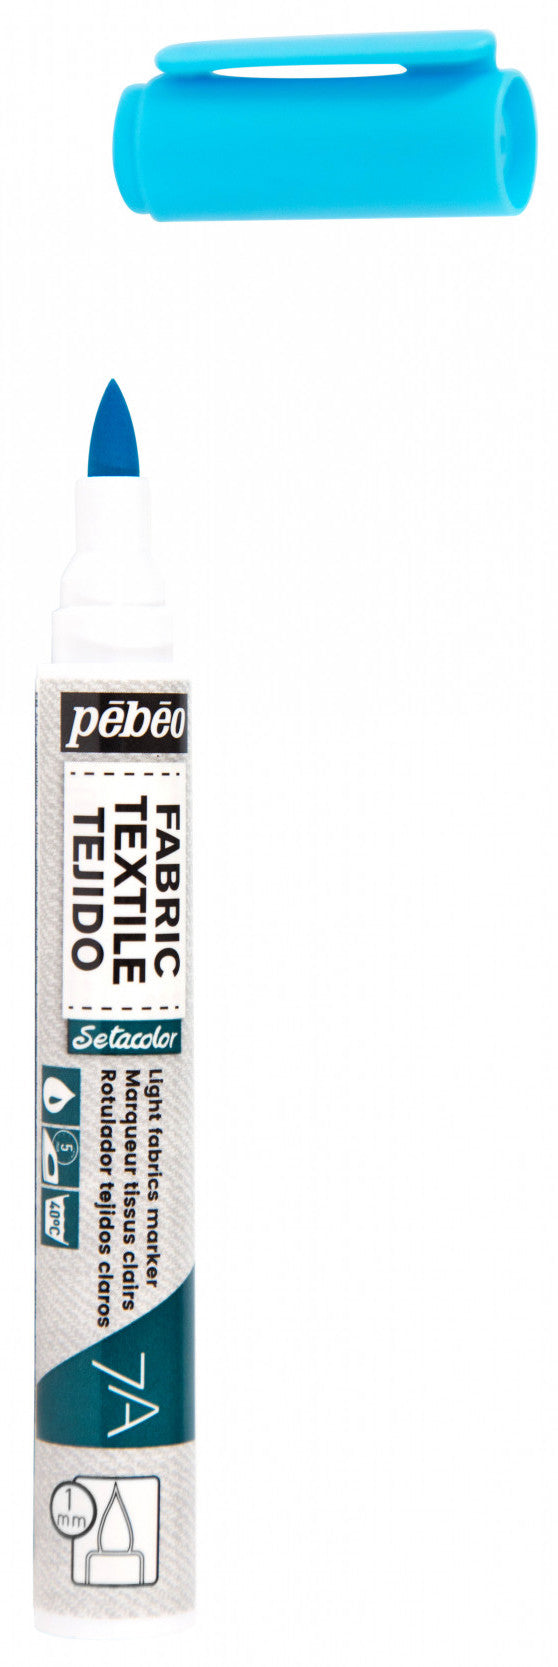 7A Light Fabric Marker - 1MM Brush Nib  قلم قماش بيبيو للقماش الفاتح - ١مم